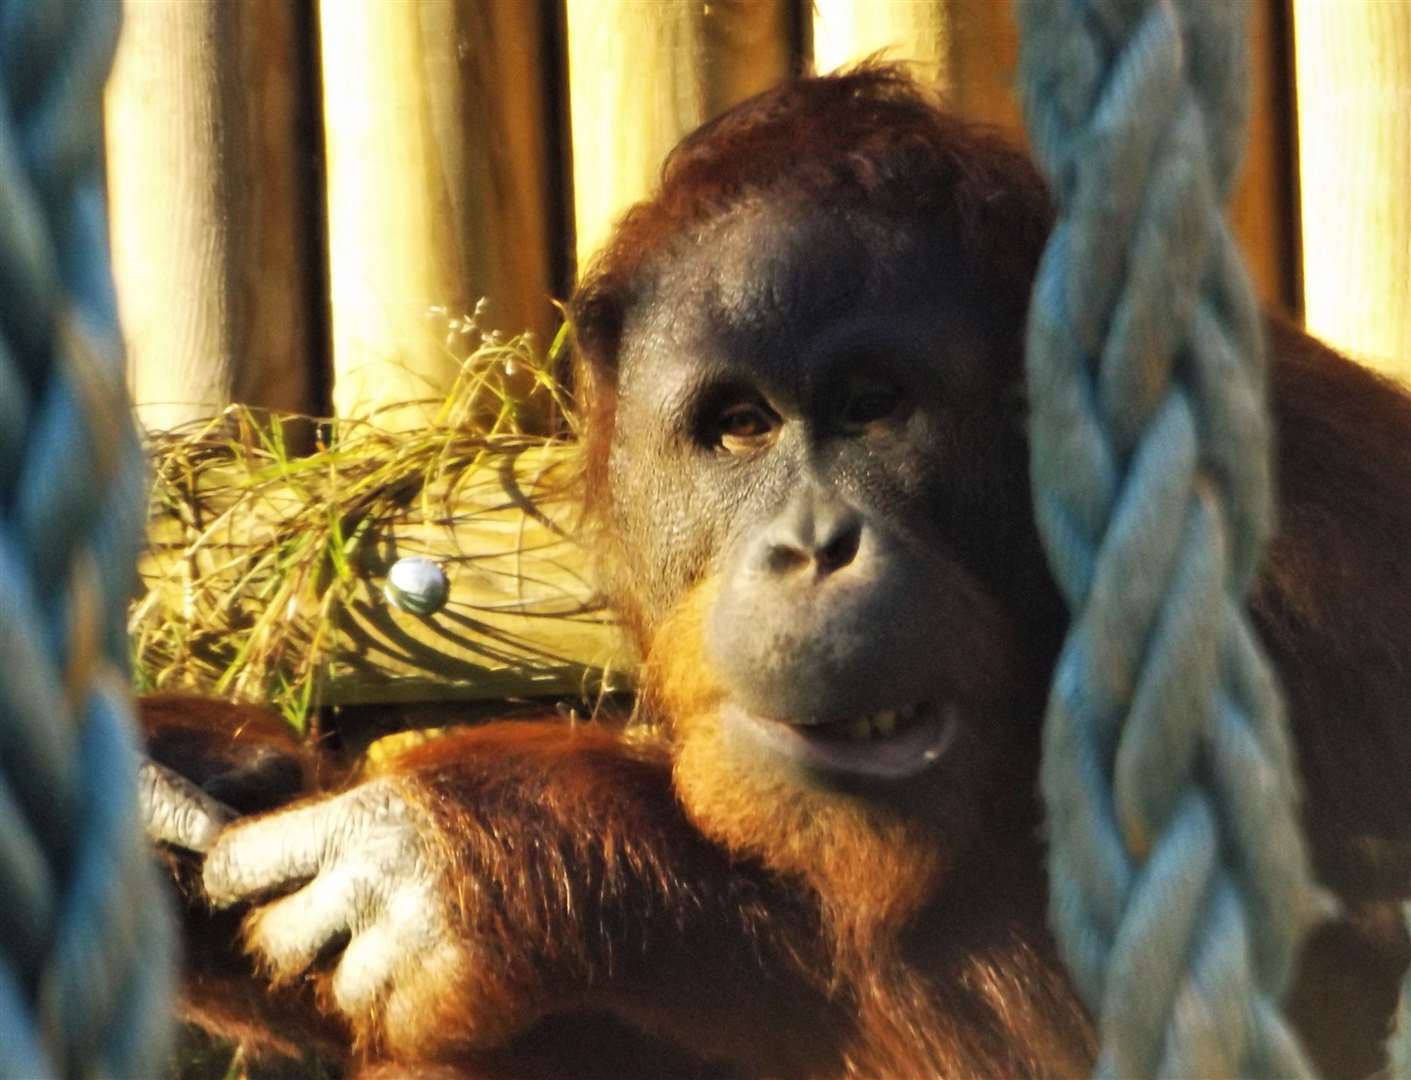 An orangutan at Wingham Wildlife Park